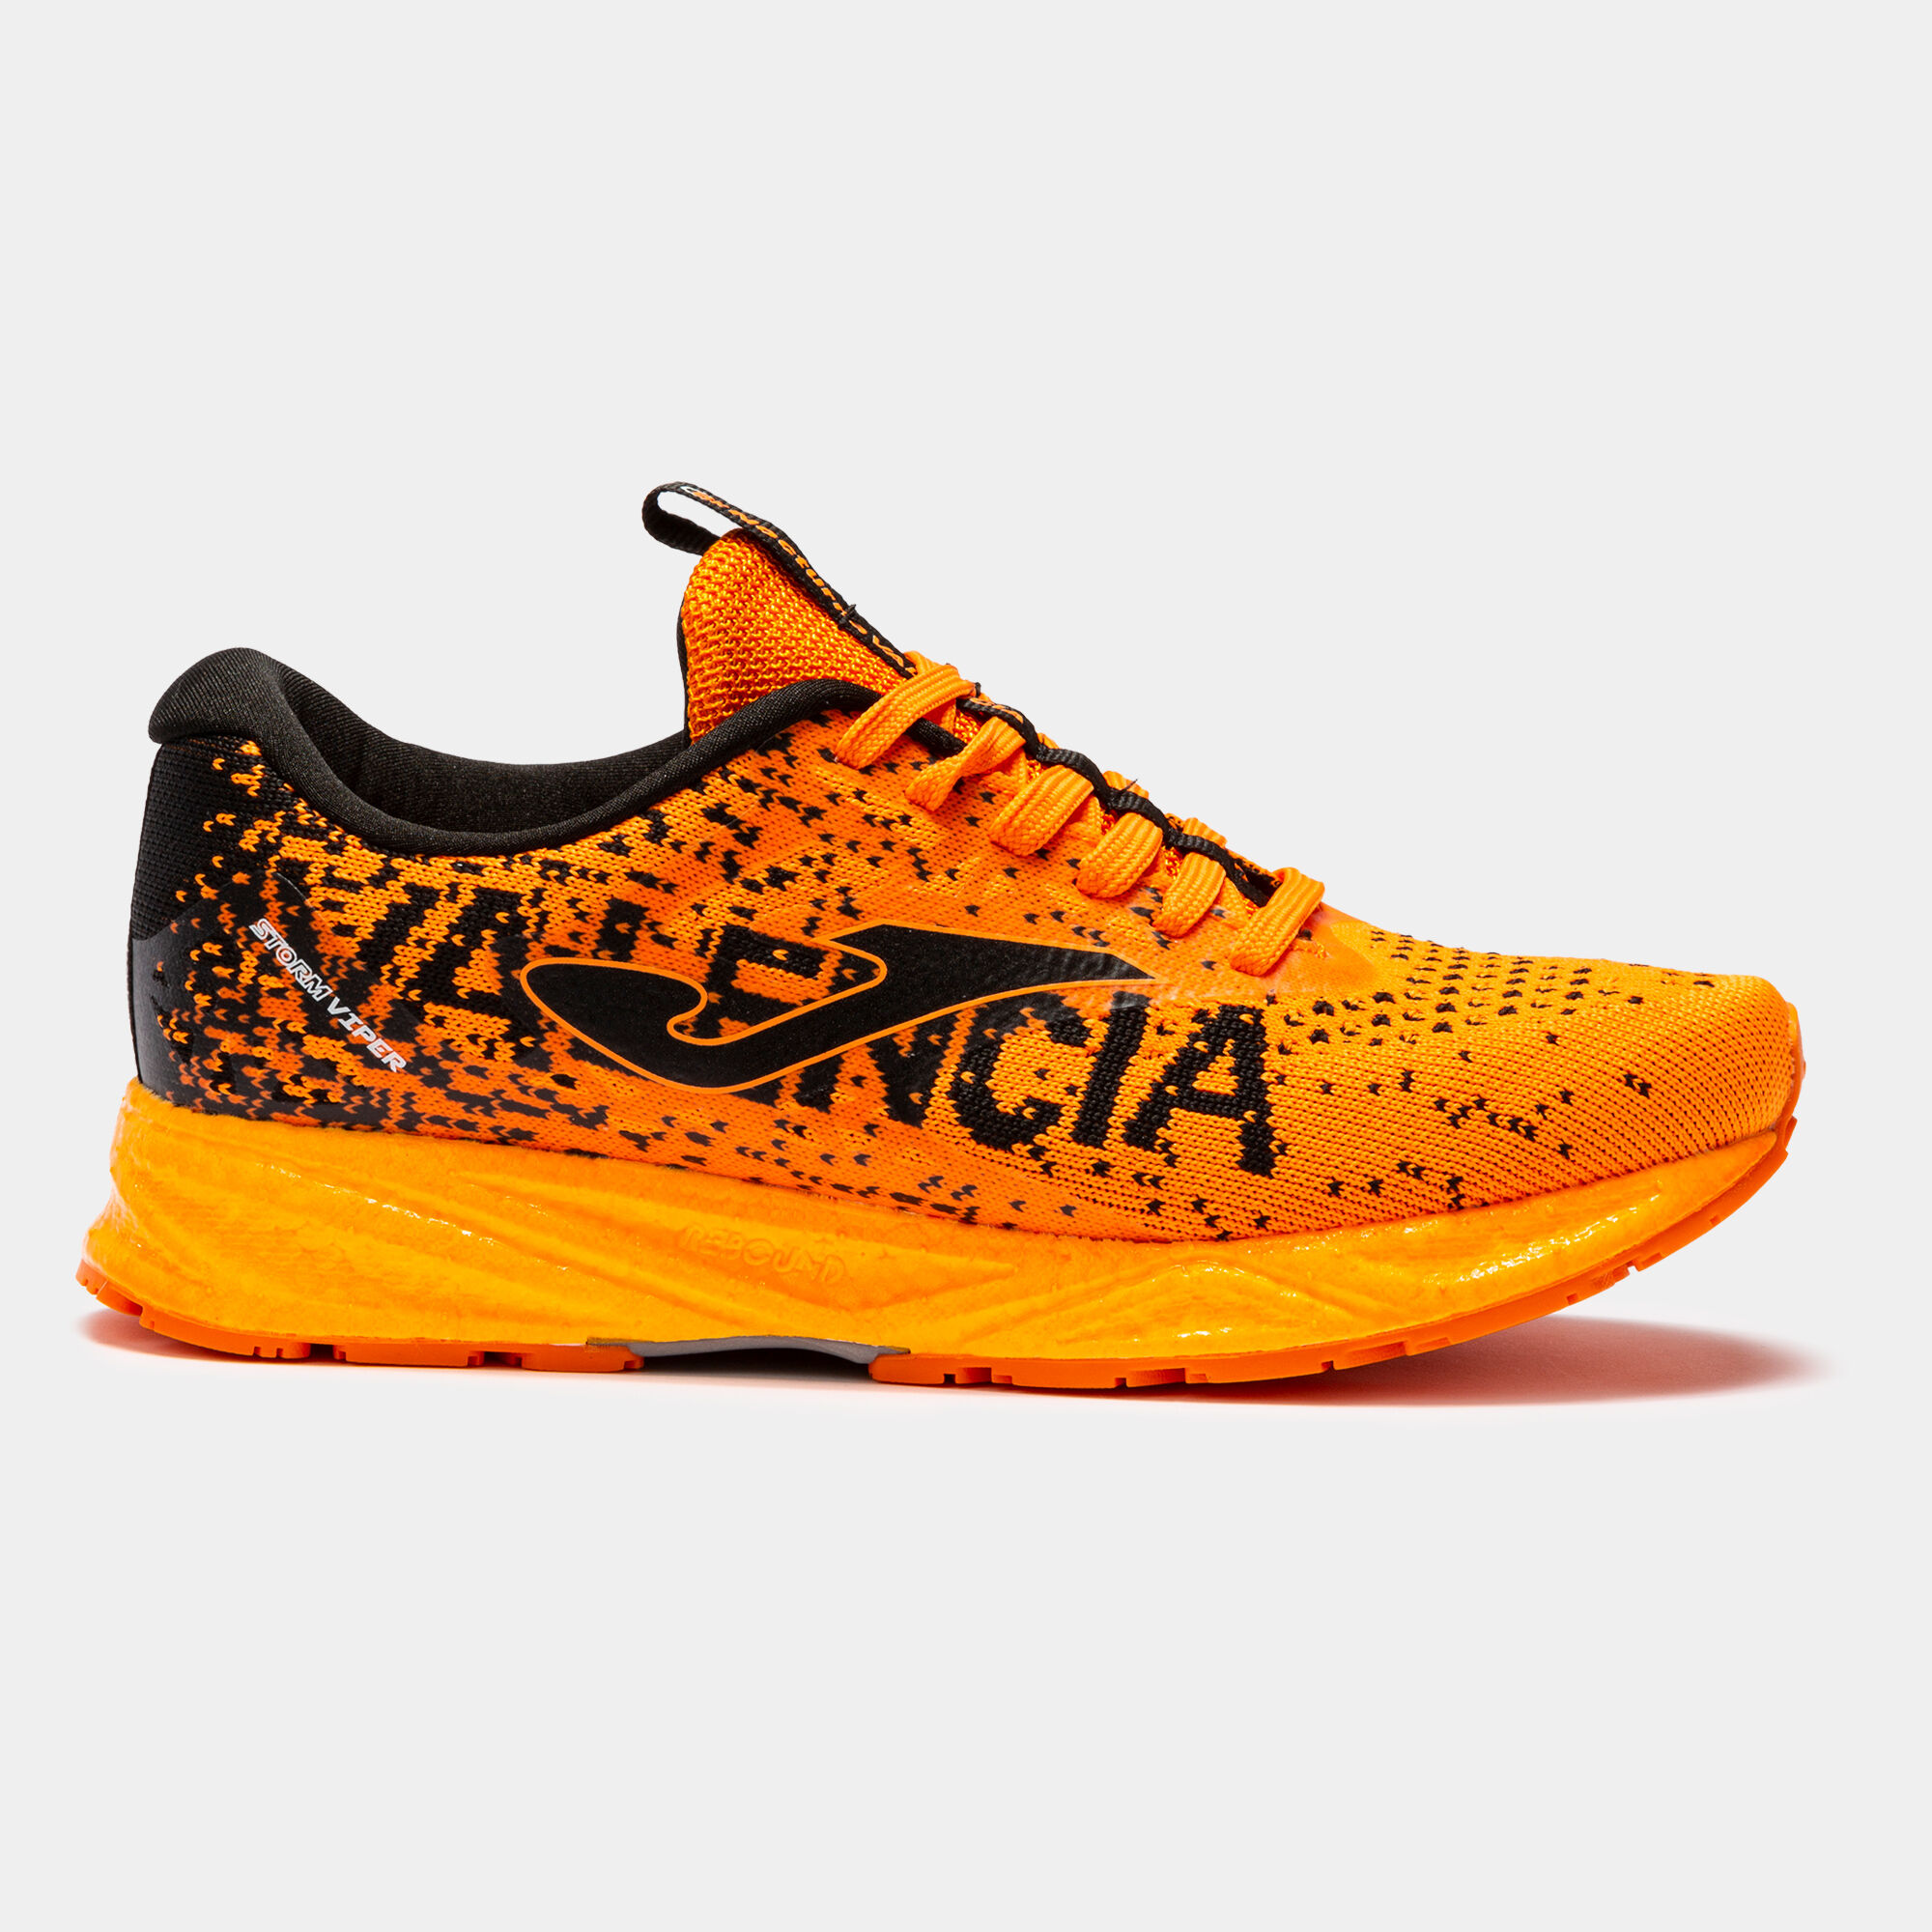 Running shoes 21 Carrera - Nocturna Valencia woman orange